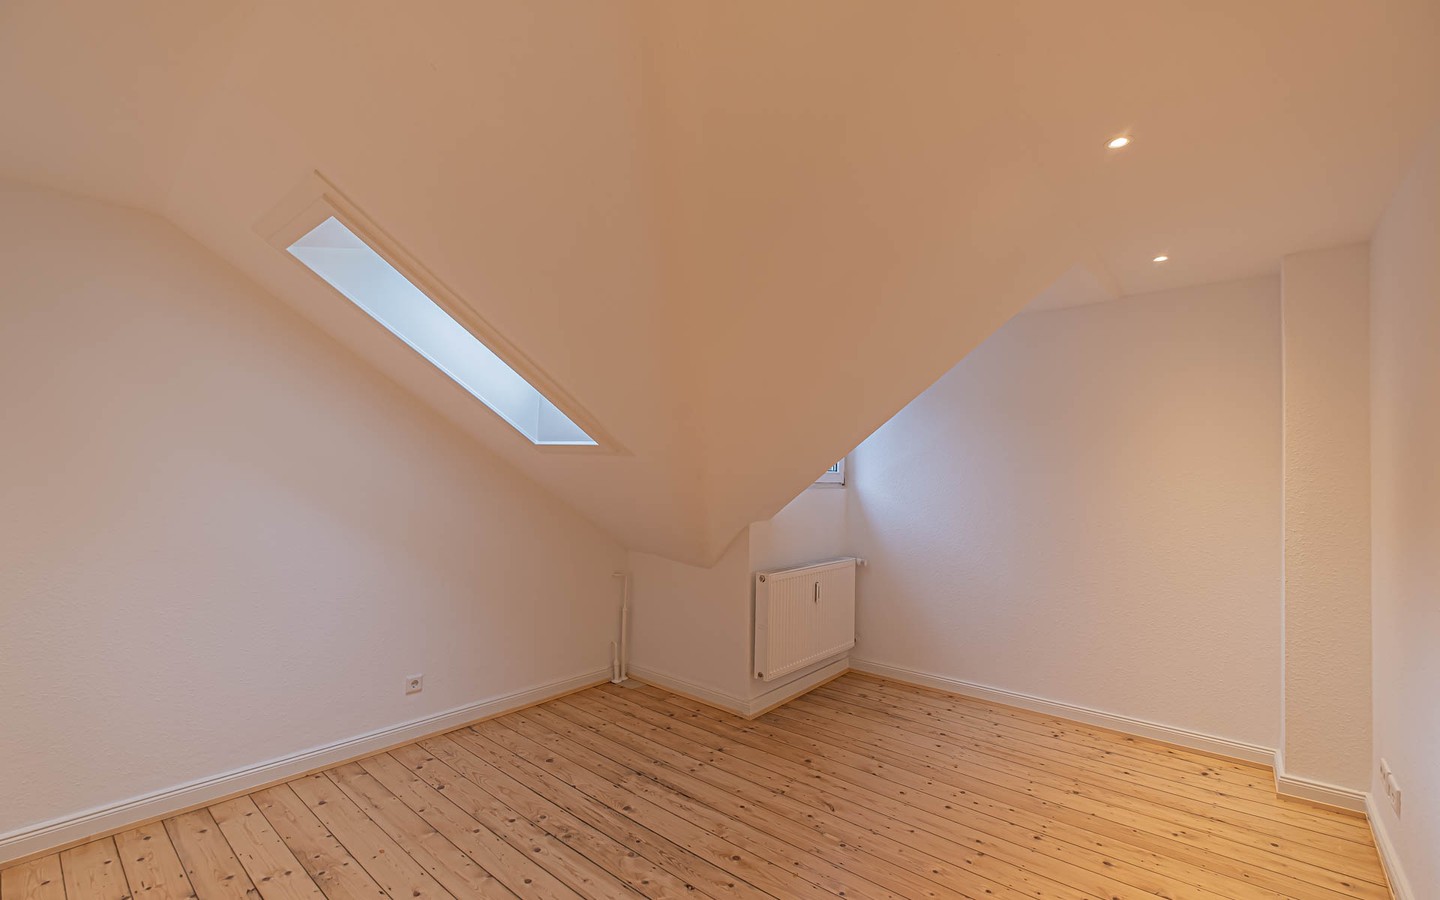 SChlafzimmer - Rarität – Dachgeschosswohnung mit Schlossblick -
 Ideal für kreative Singles oder Paare